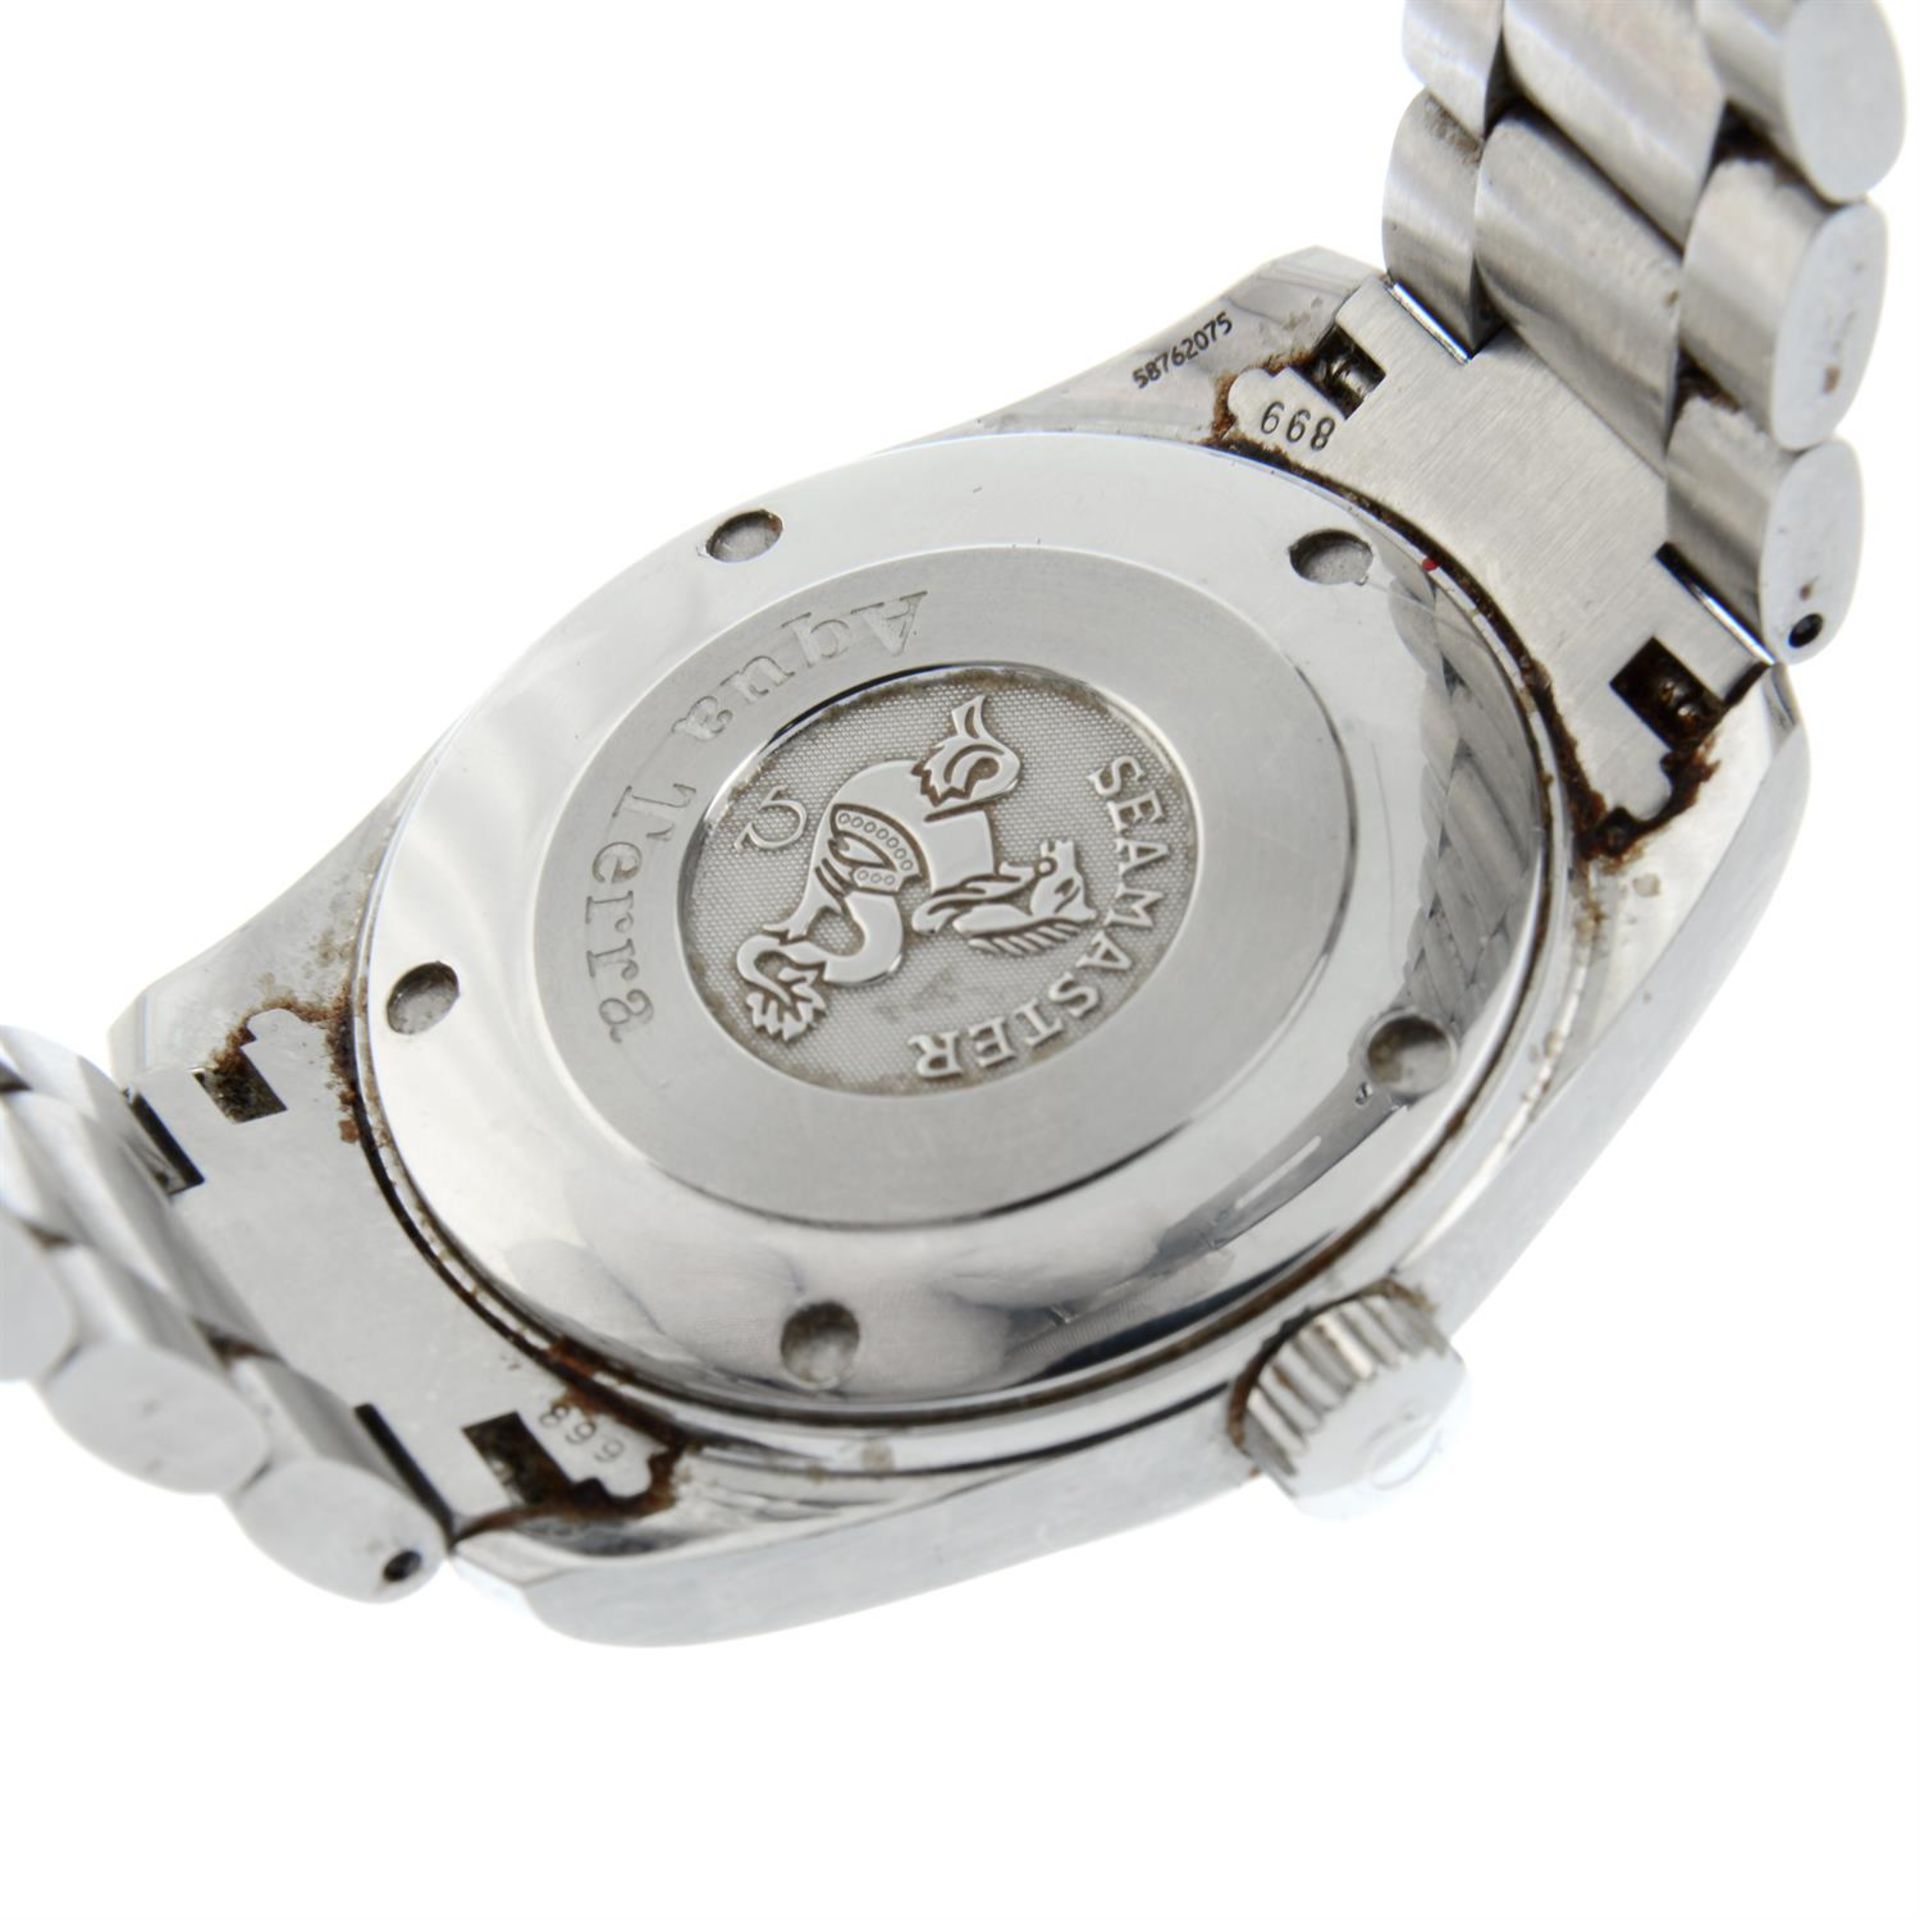 OMEGA - a stainless steel Seamaster Aqua Terra bracelet watch, 36mm. - Image 4 of 6